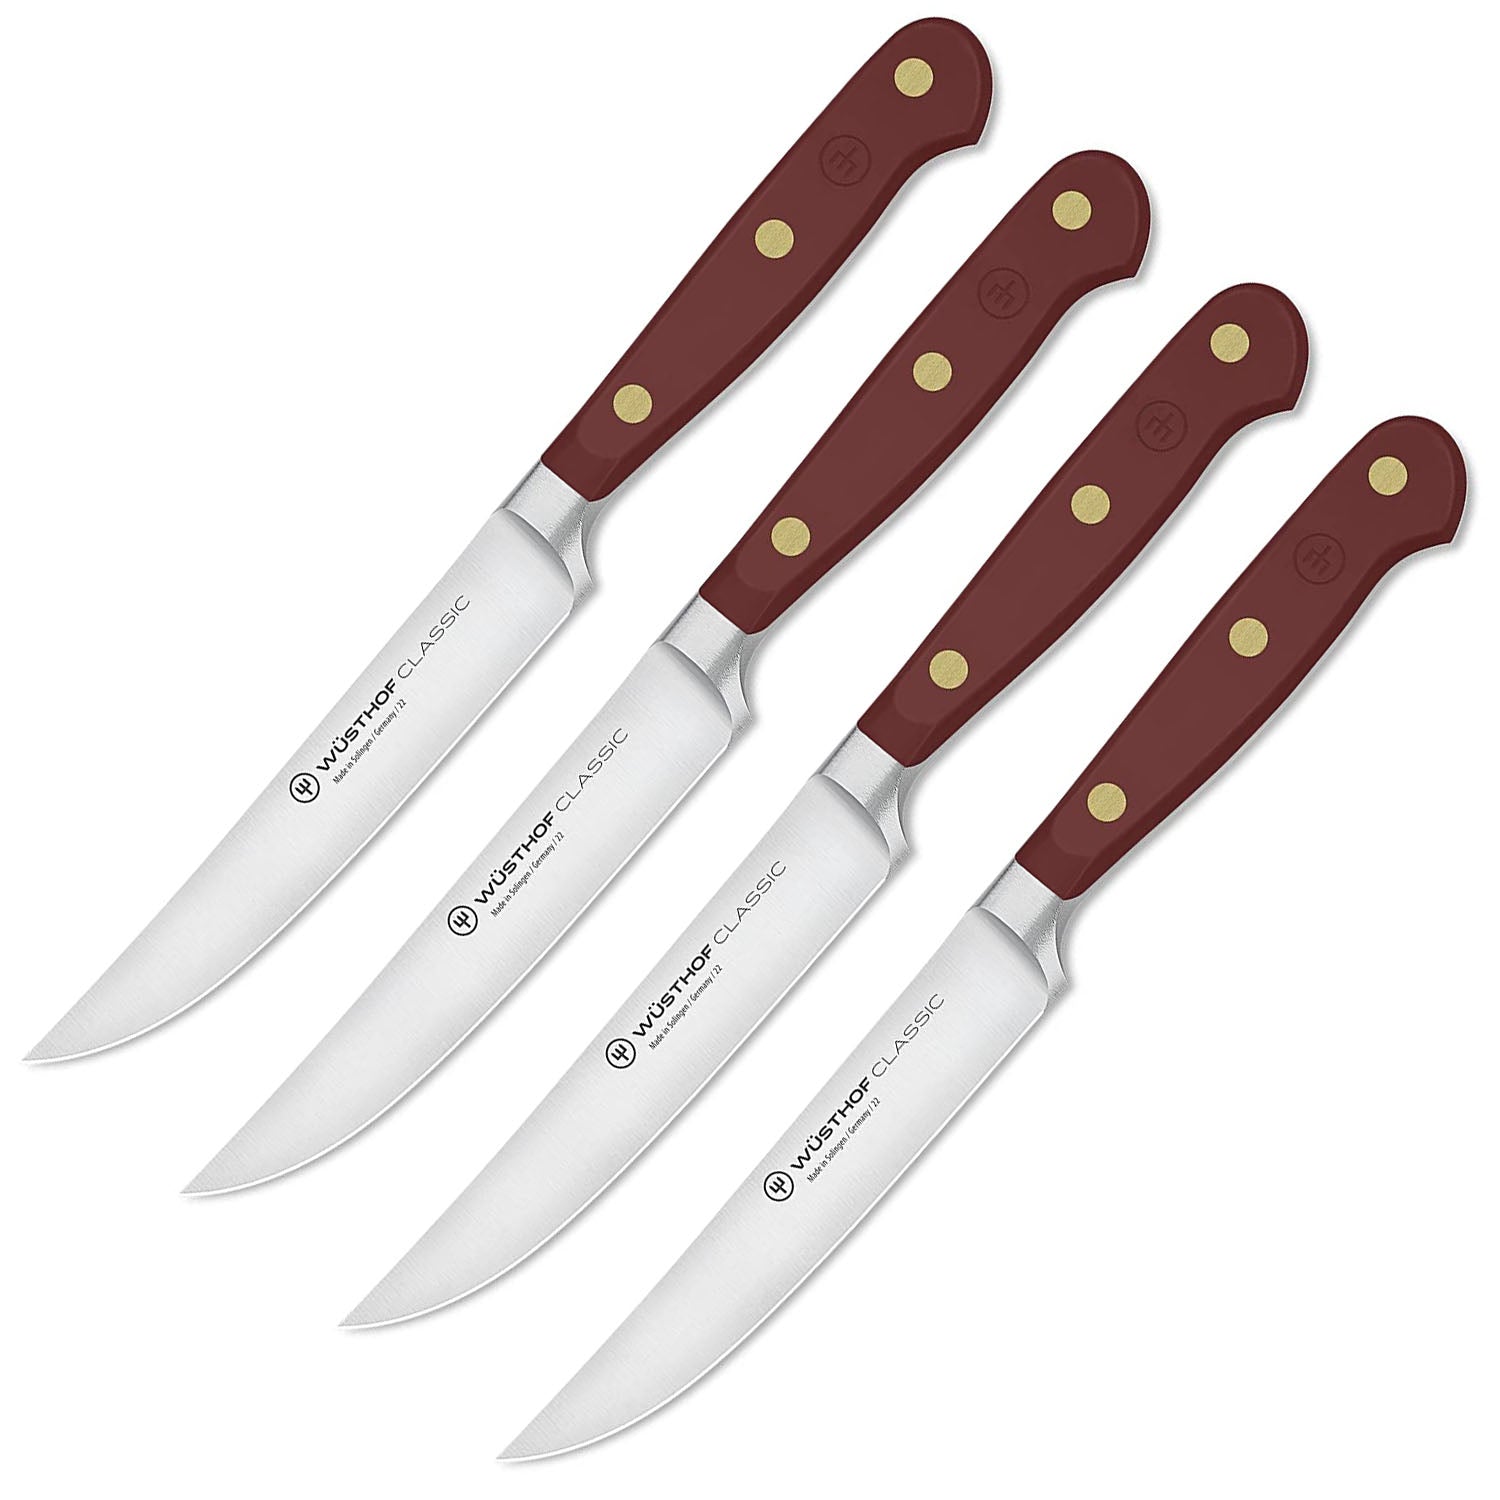 Shun Classic Steak Knives, Set of 4 + Reviews